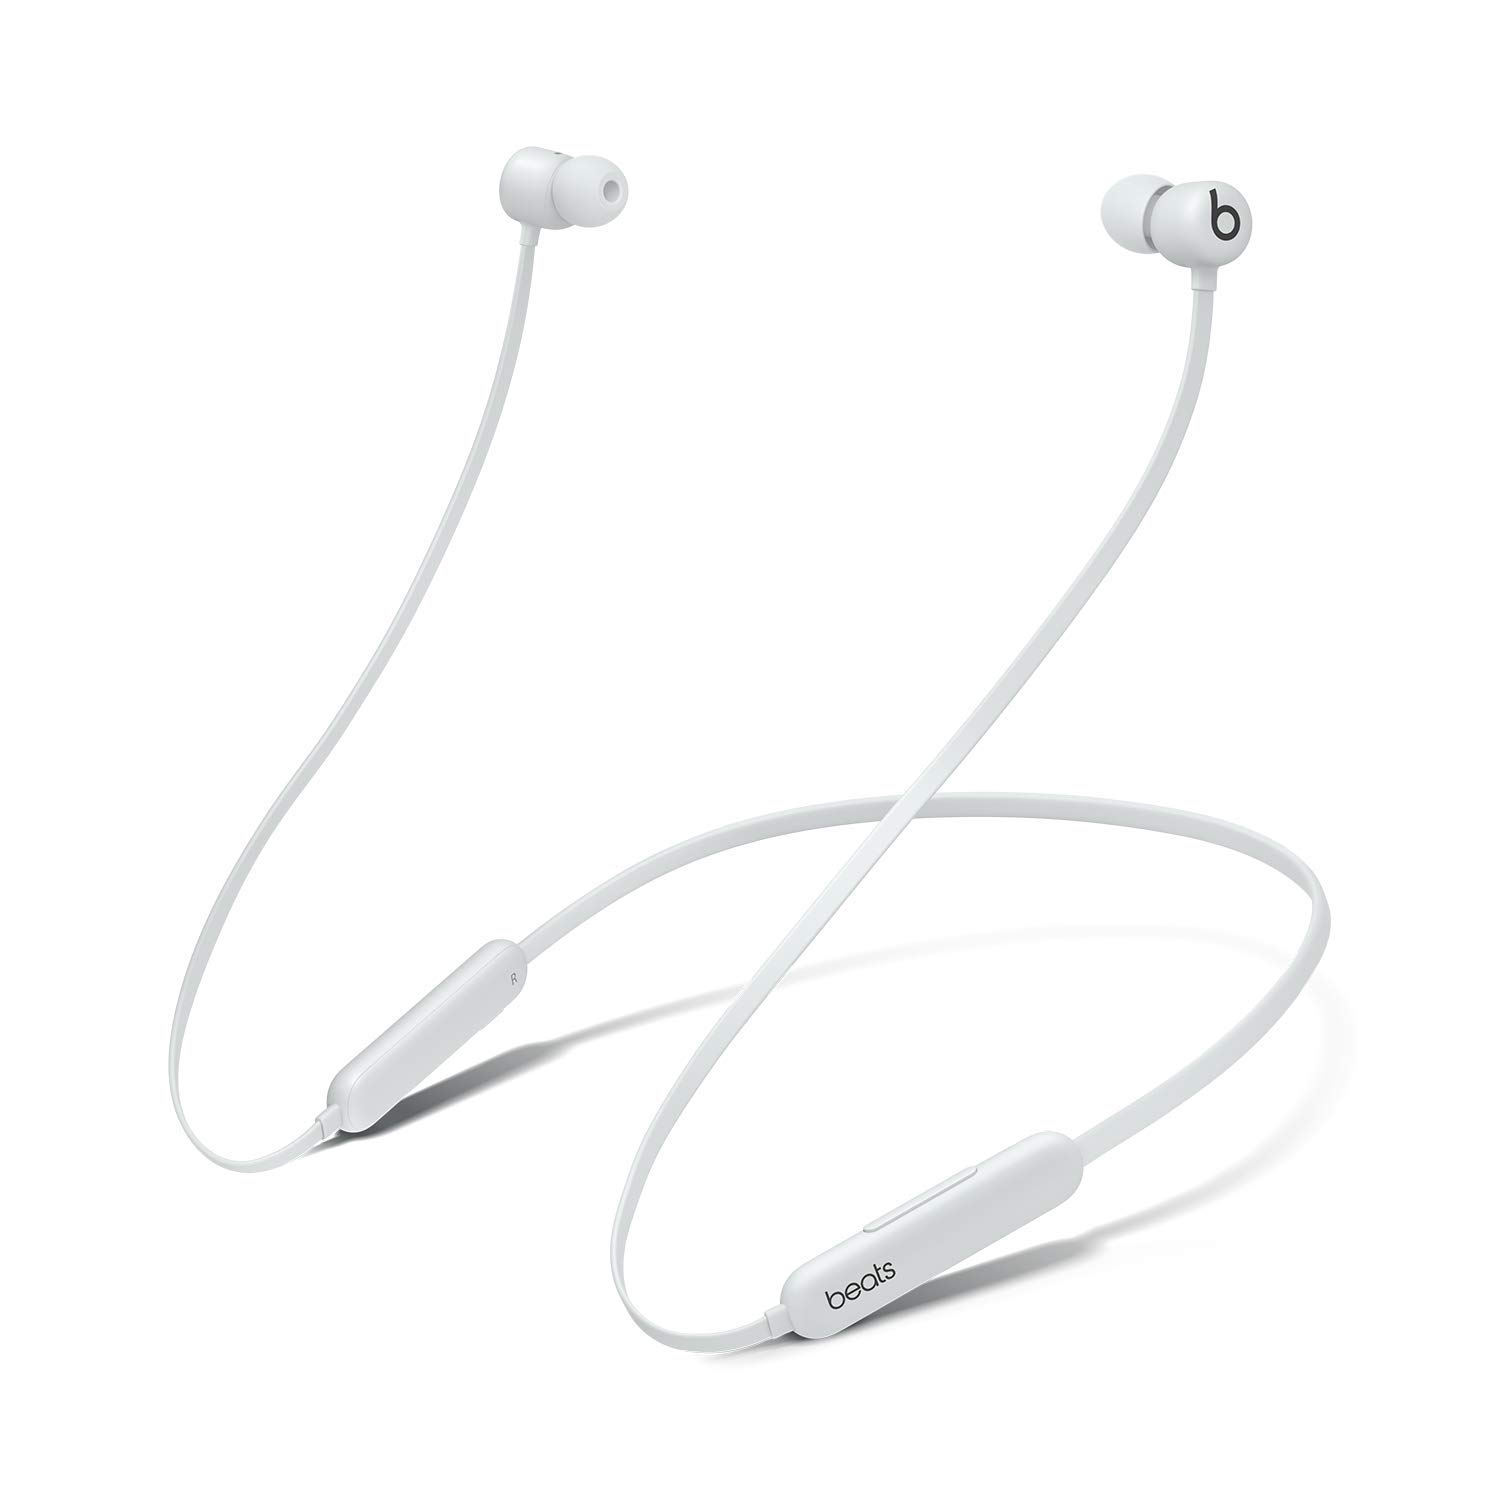 Beats Flex Wireless Earbud Headphones with Built-in Microphone - Smoked Gray (Renewed)